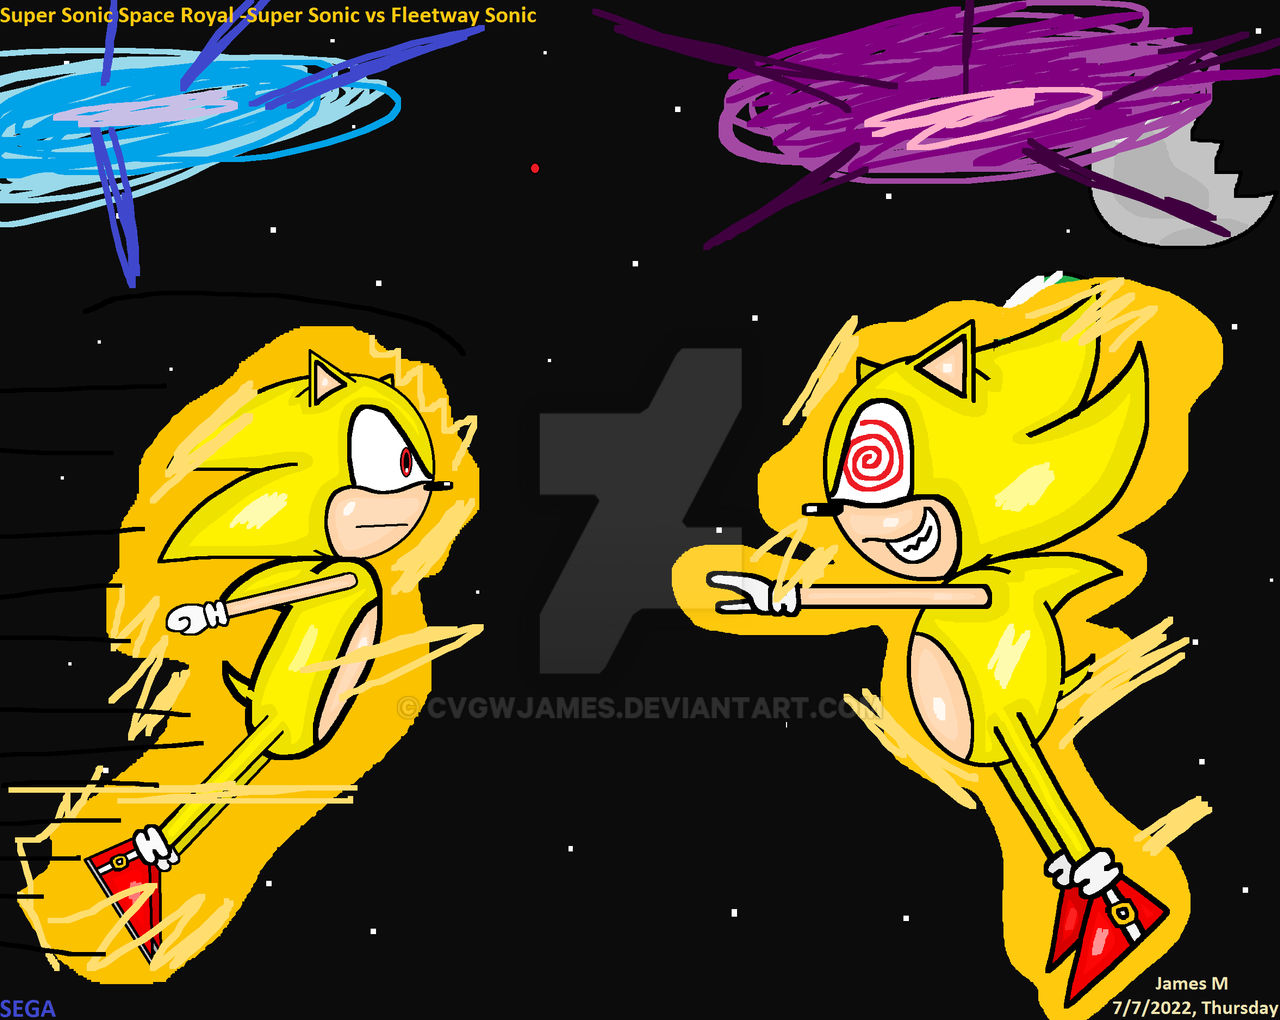 Fleetway Super Sonic, Super Sonic by ~Sweecrue on deviantART